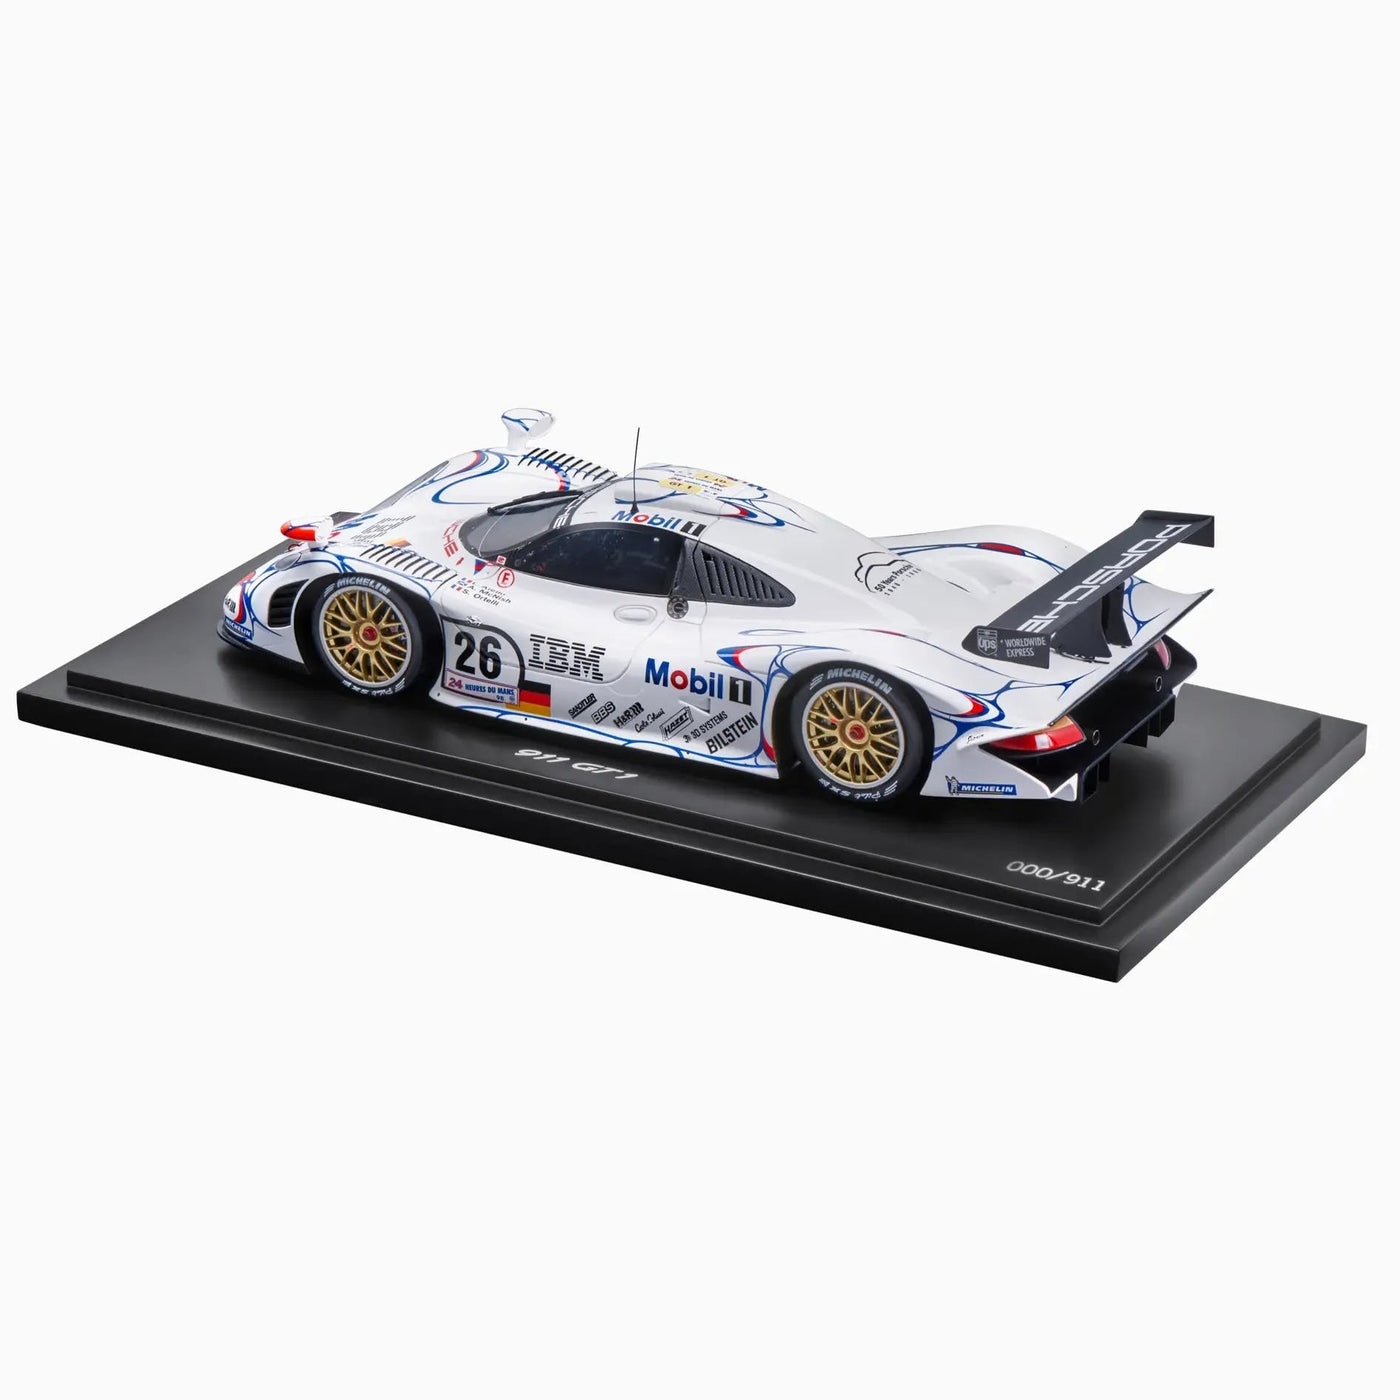 Porsche 911 GT1 Model Car 1:18 scale - 1998 Hours of Le Mans winner